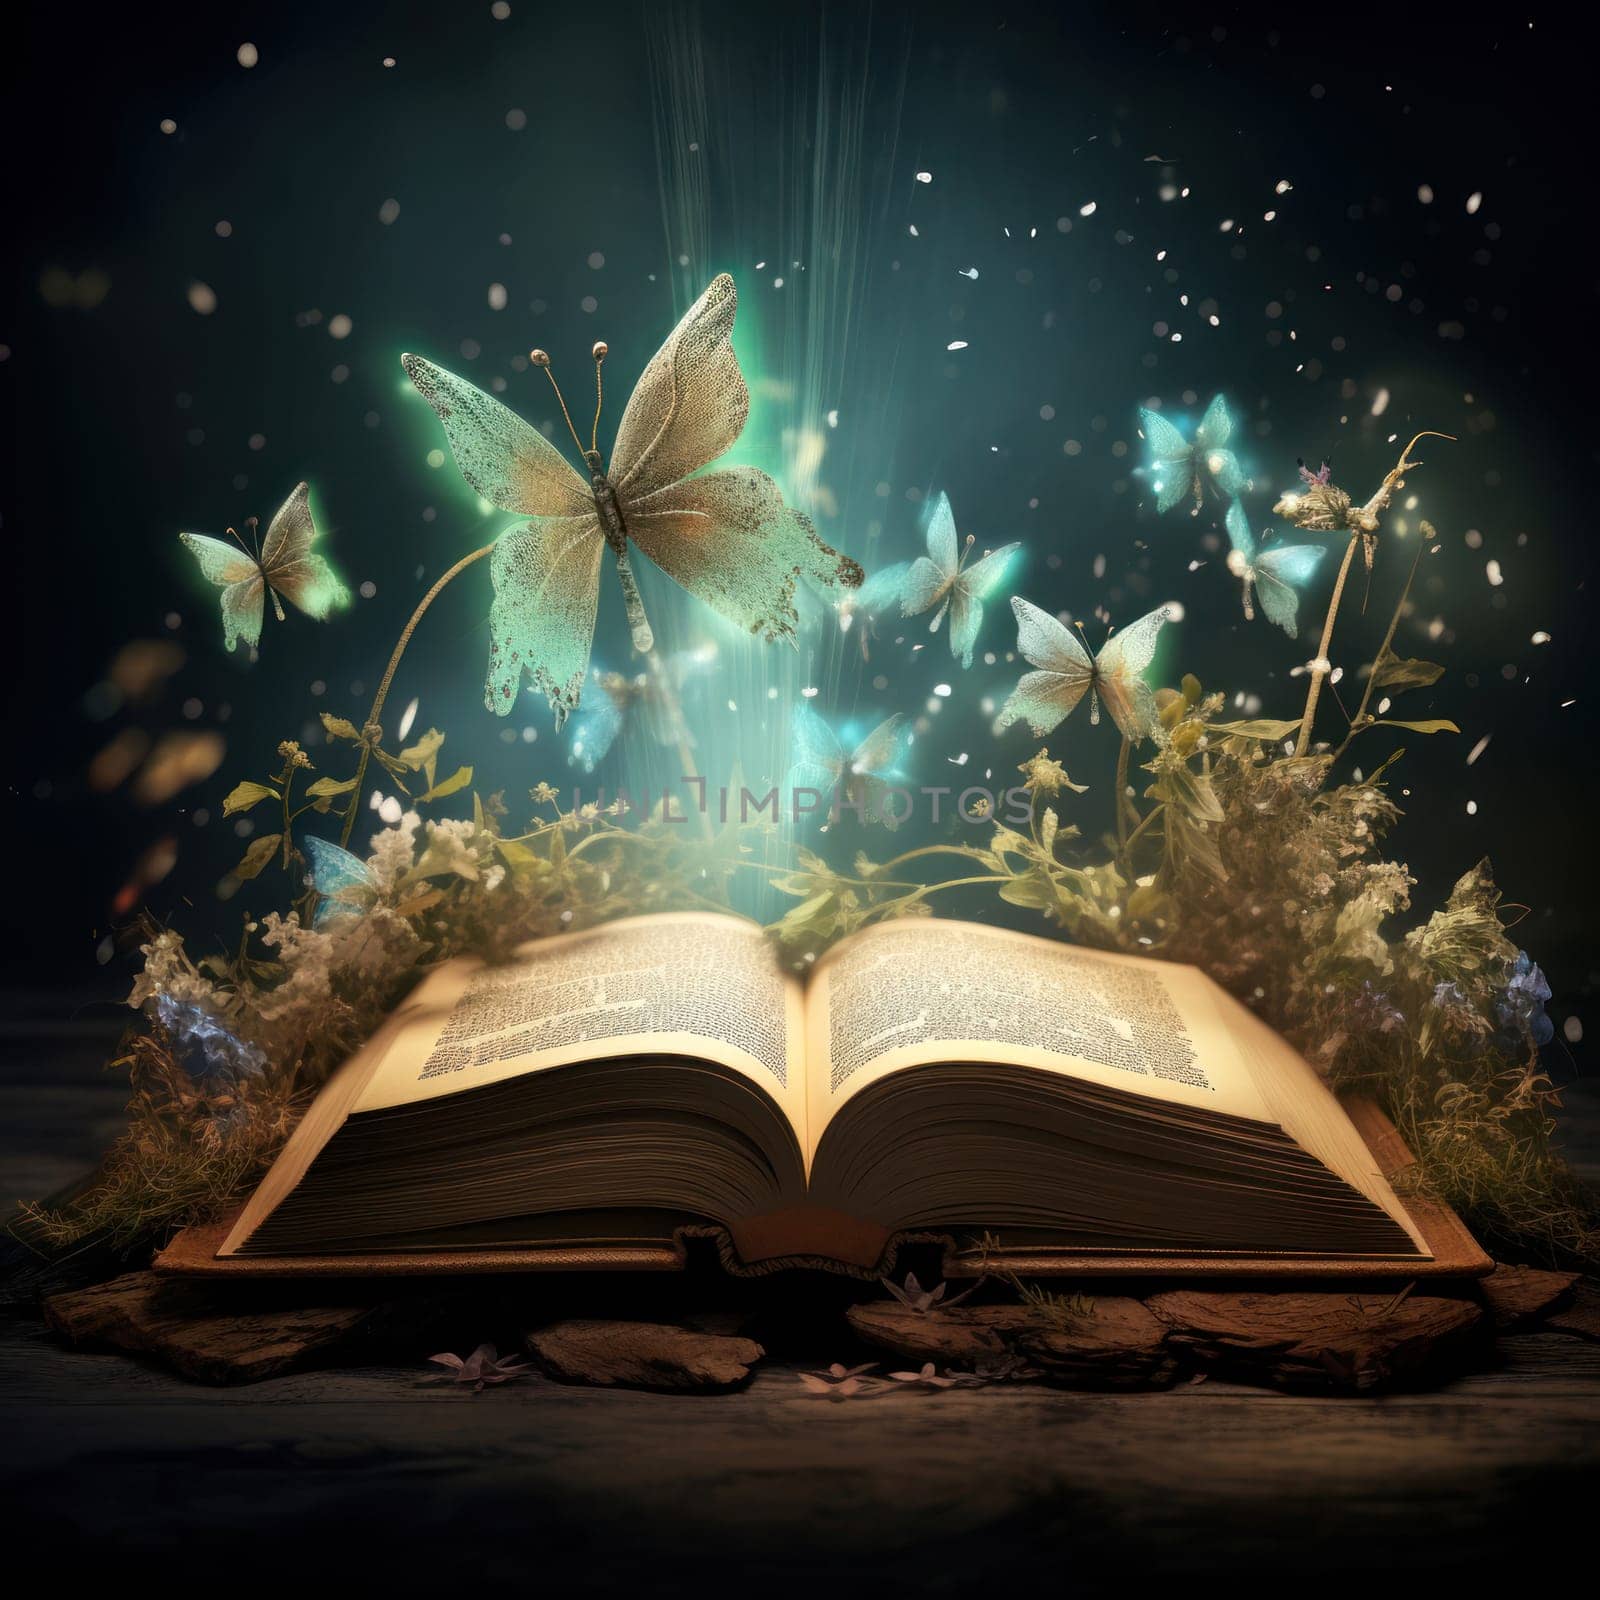 Enchanted Book with Magical Butterflies by ugguggu